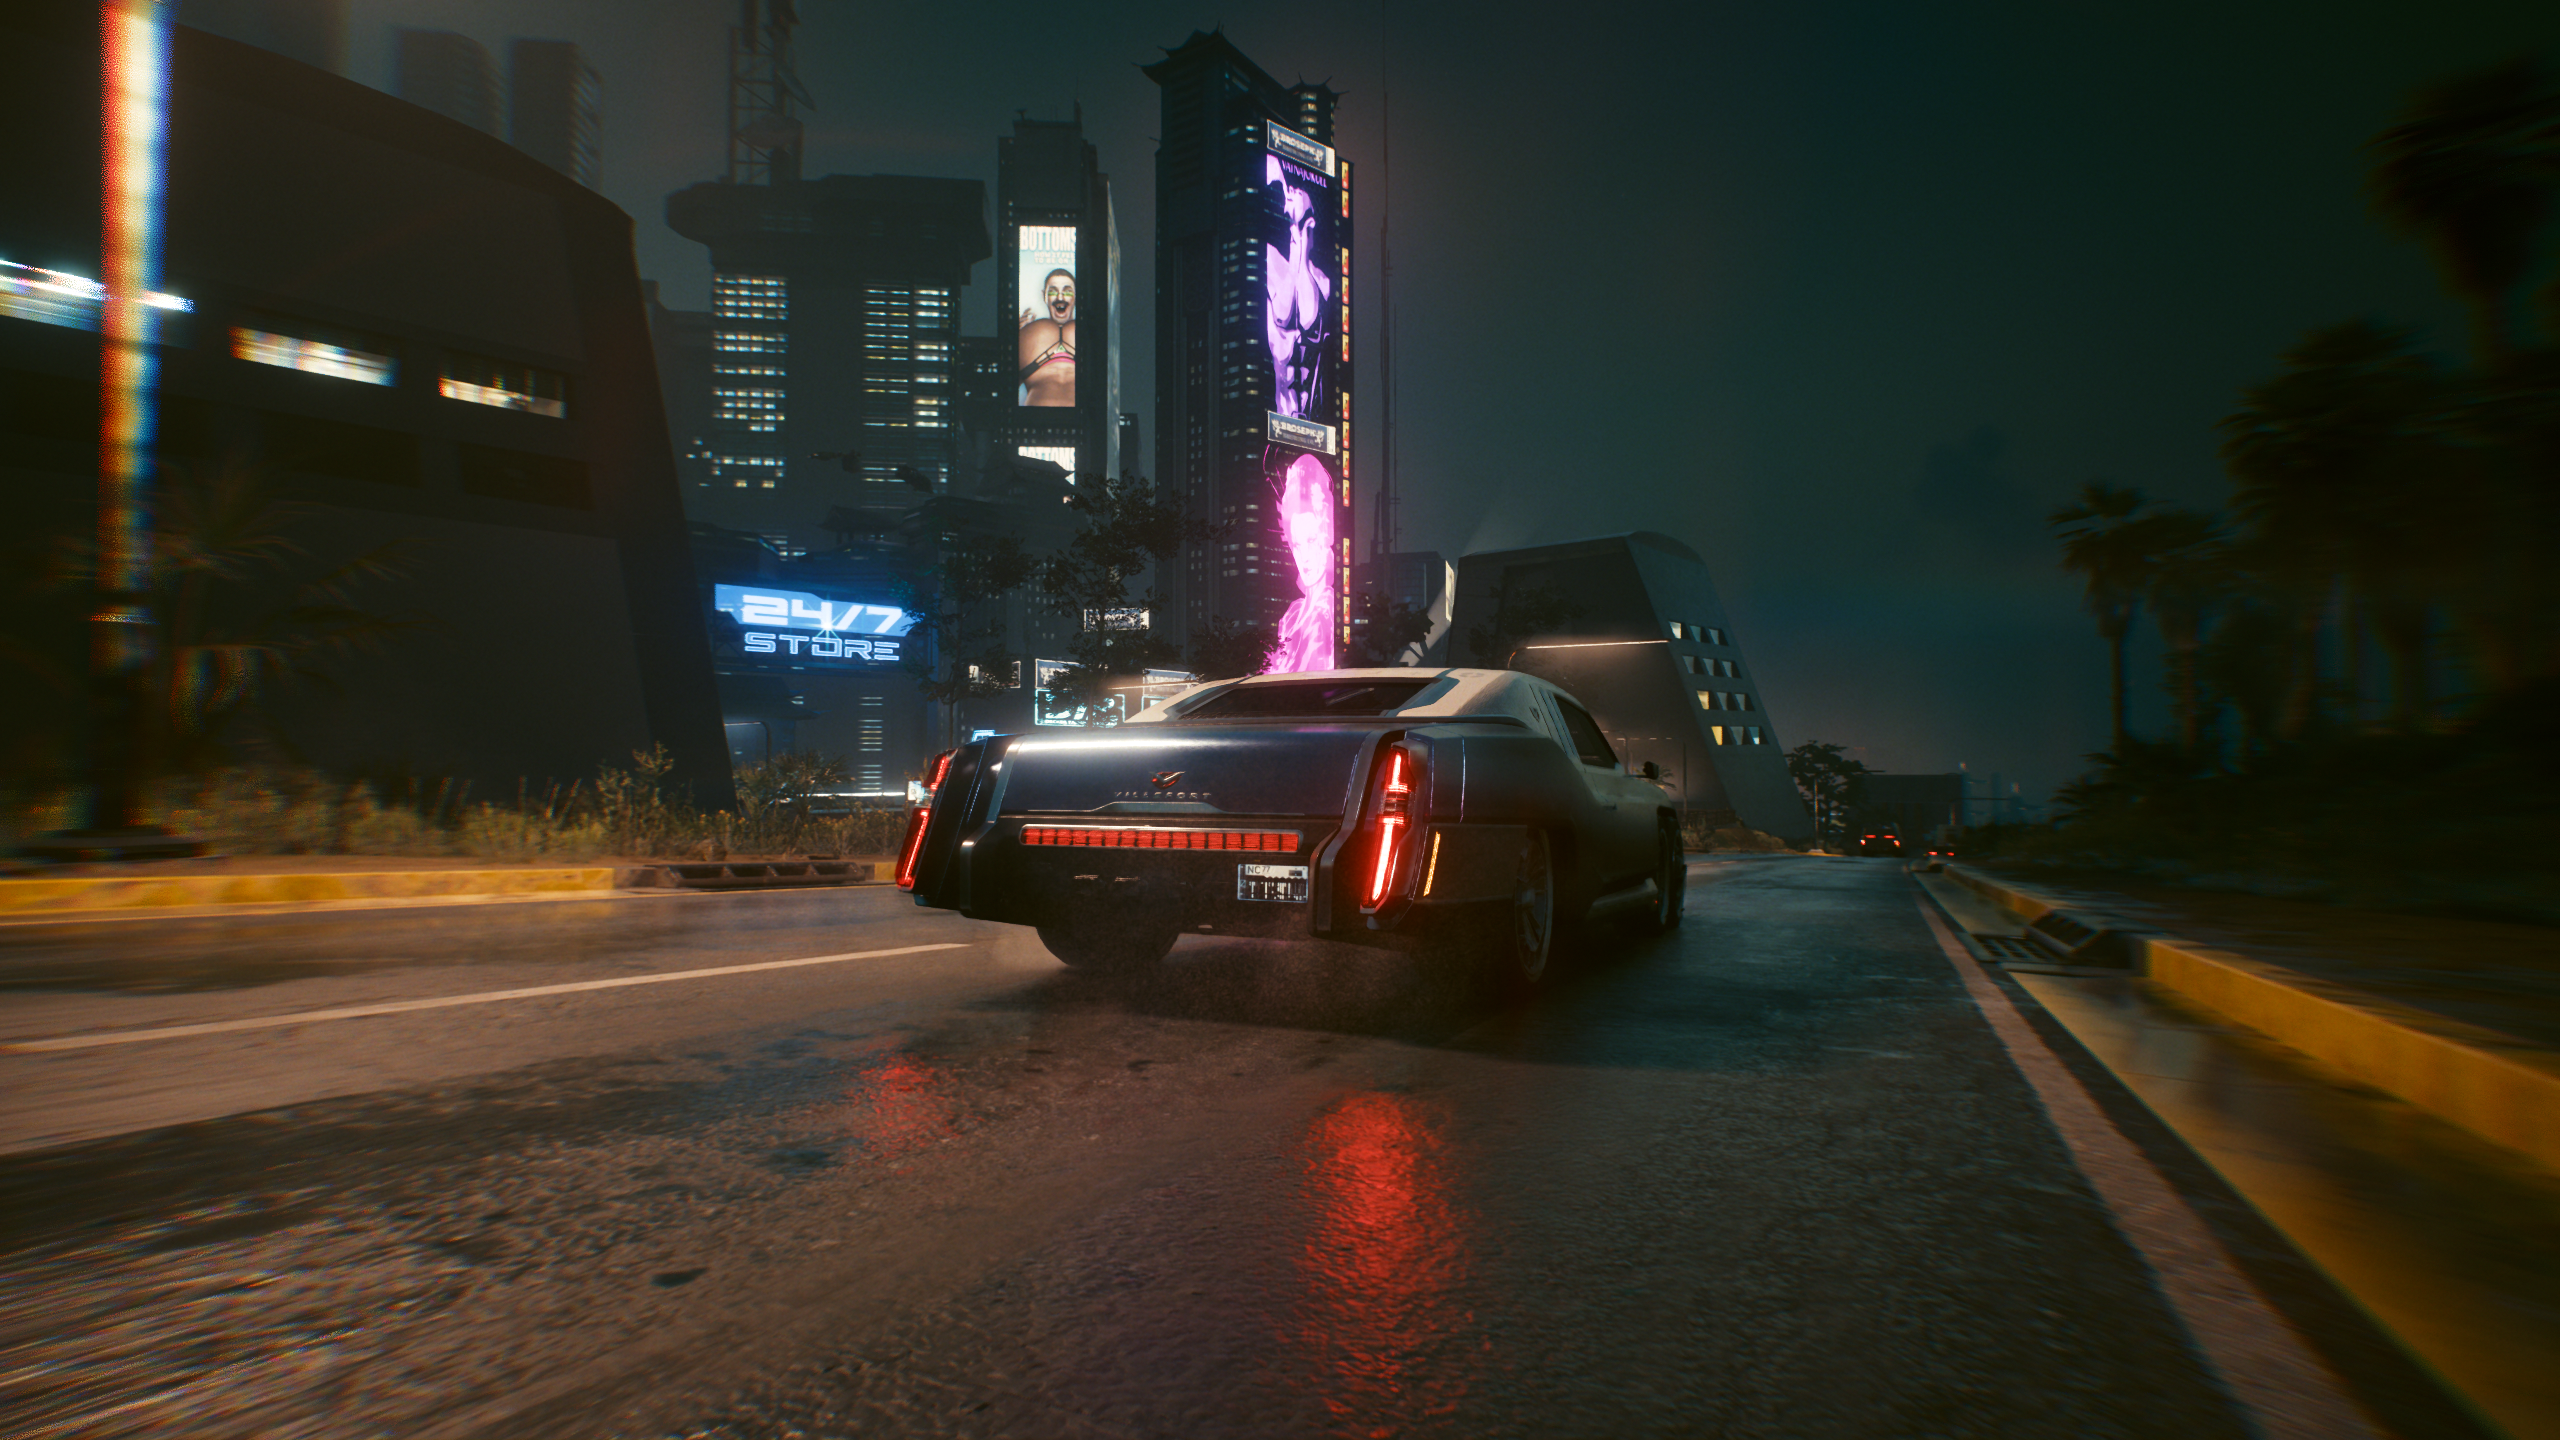 Cyberpunk Cyberpunk 2077 City Lights Video Game Art Car Sports Car Neon Drive Driver 2560x1440